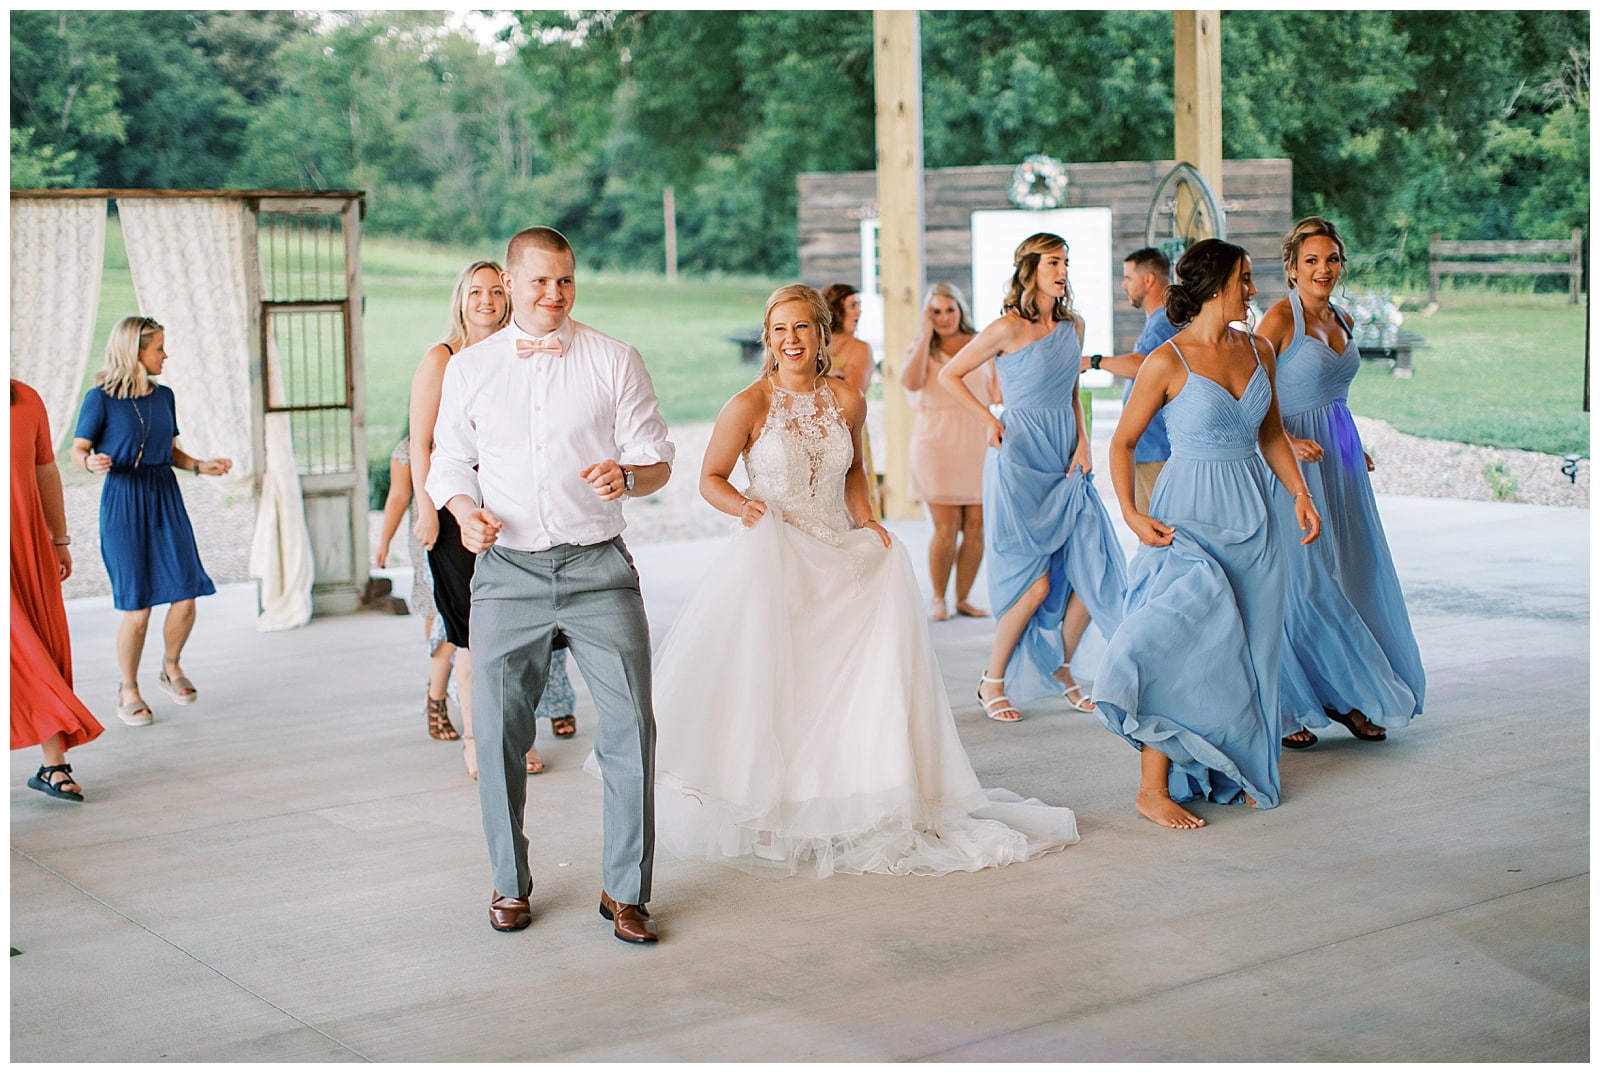 Danielle-Defayette-Photography-Farm-at-Bentley-Fields-Wedding-2020_0049.jpg